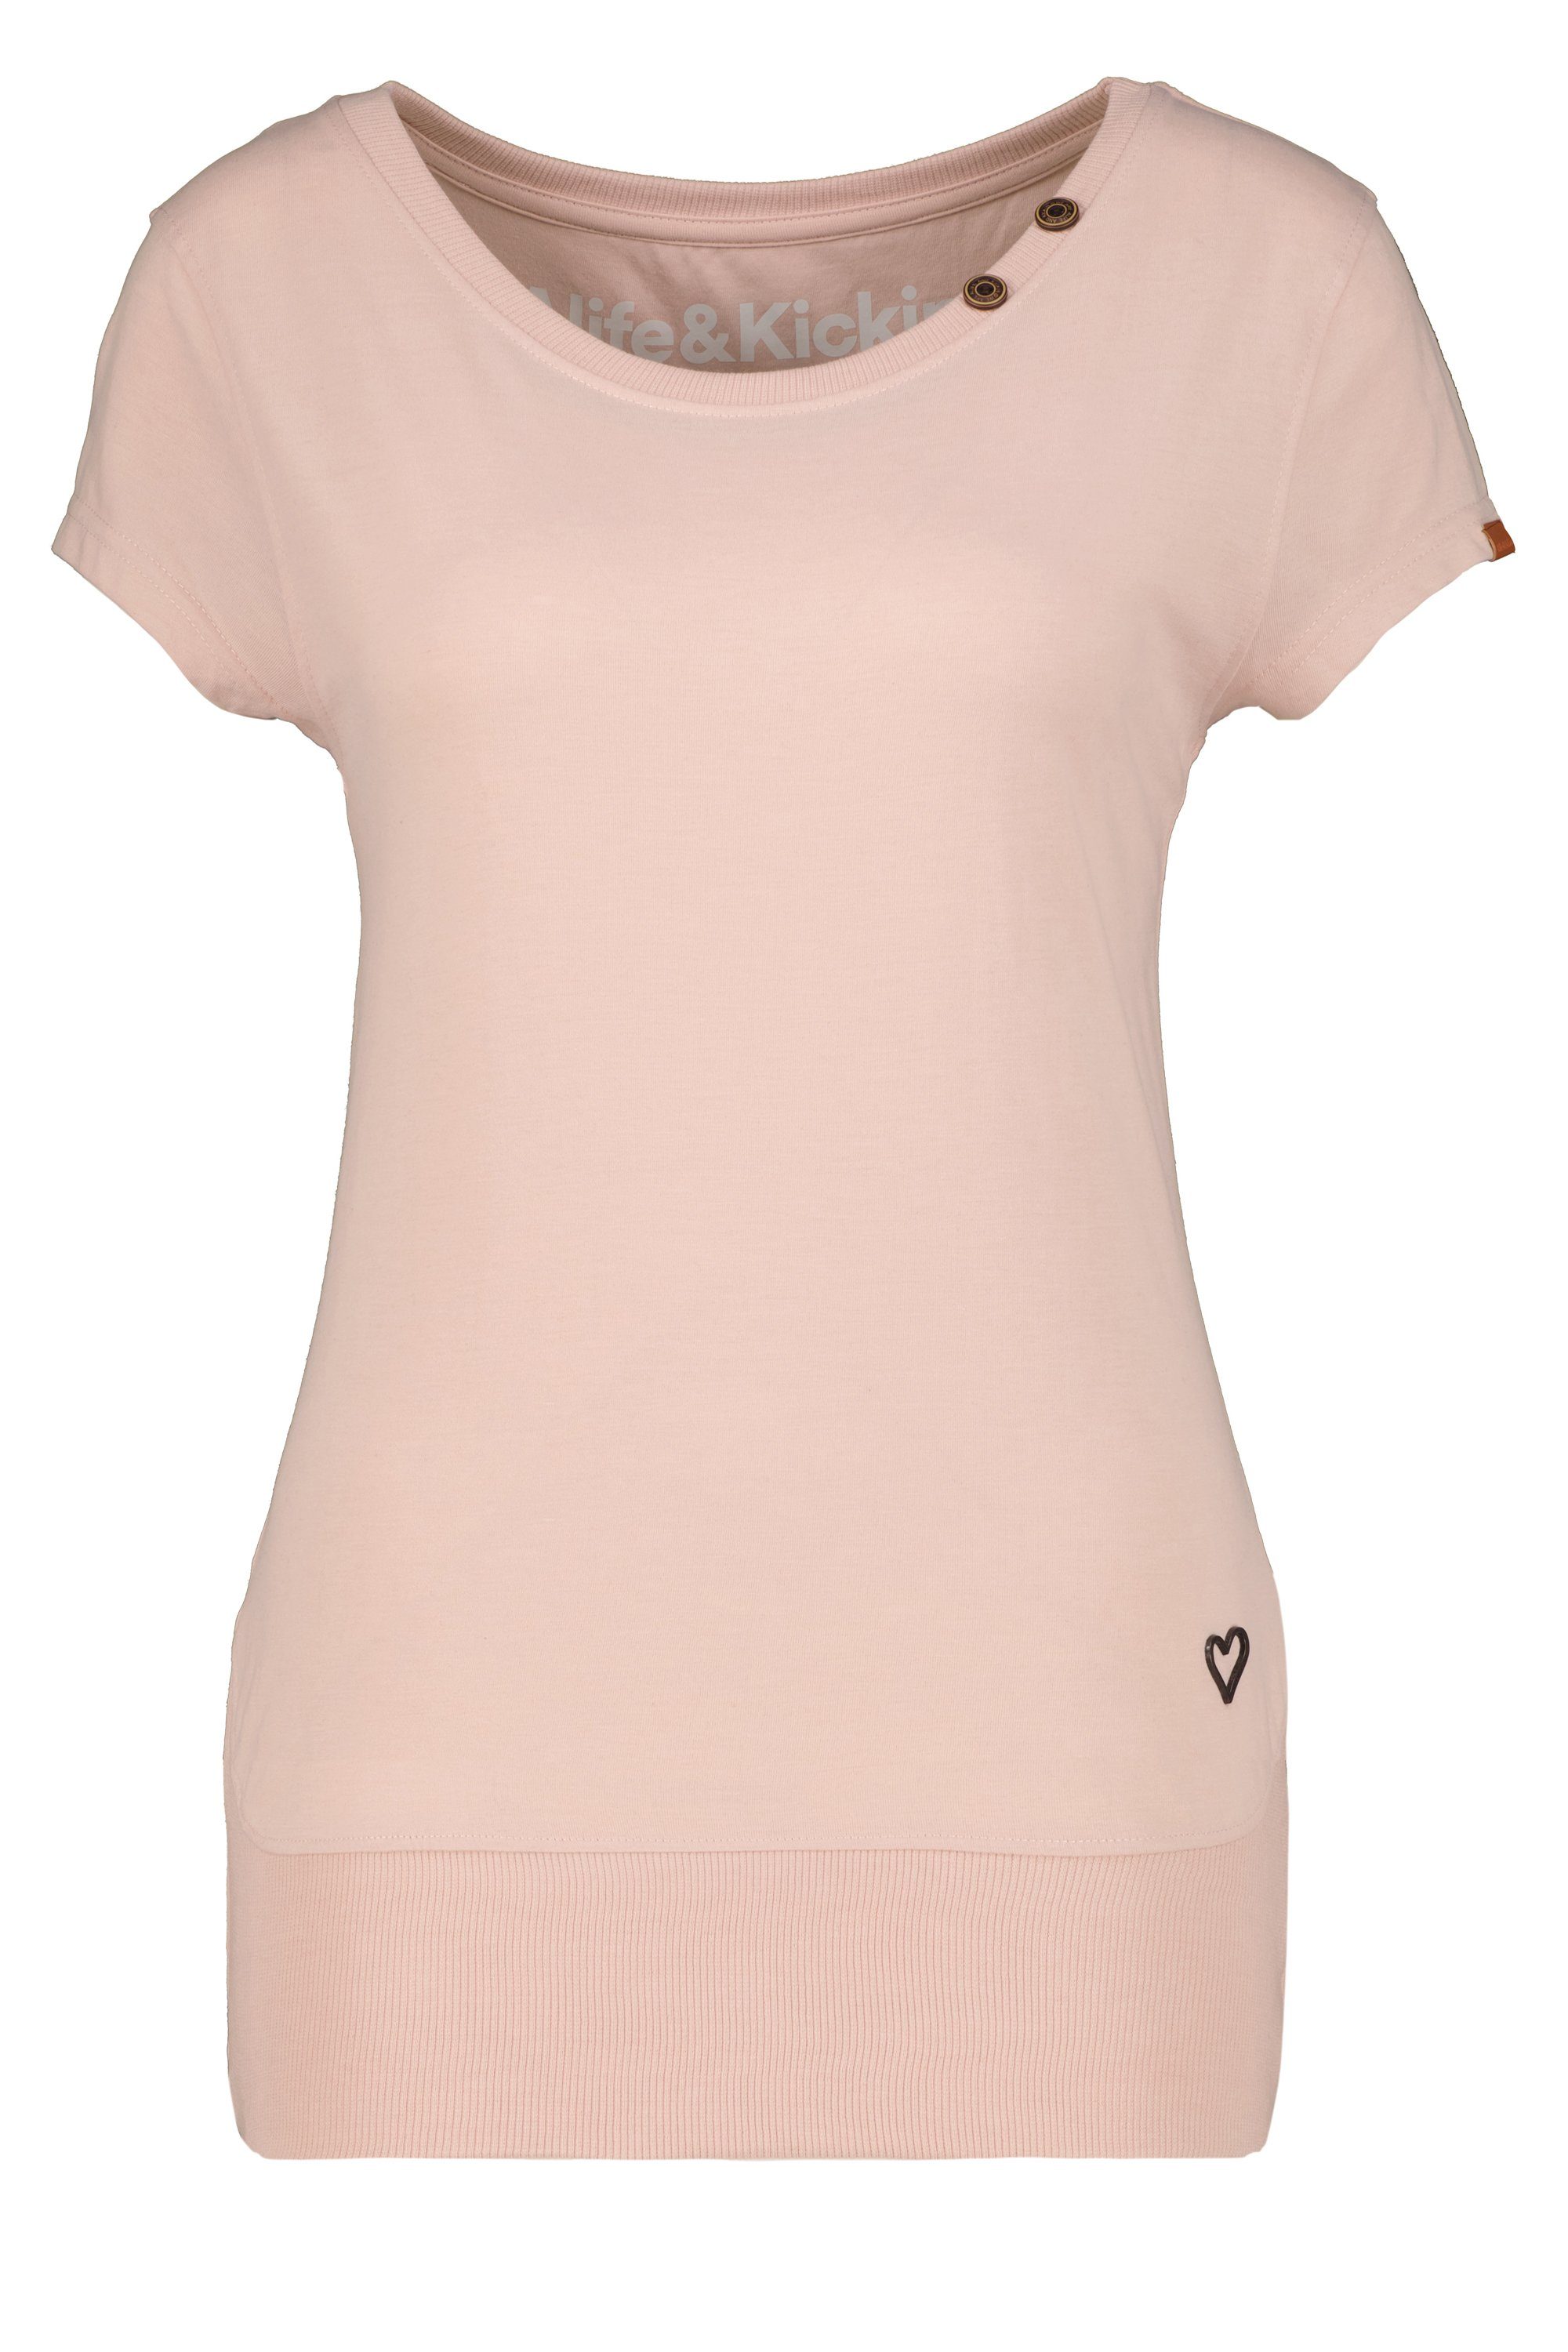 Alife & Kickin T-Shirt CocoAK A Damen Shirt melange blossom T-Shirt